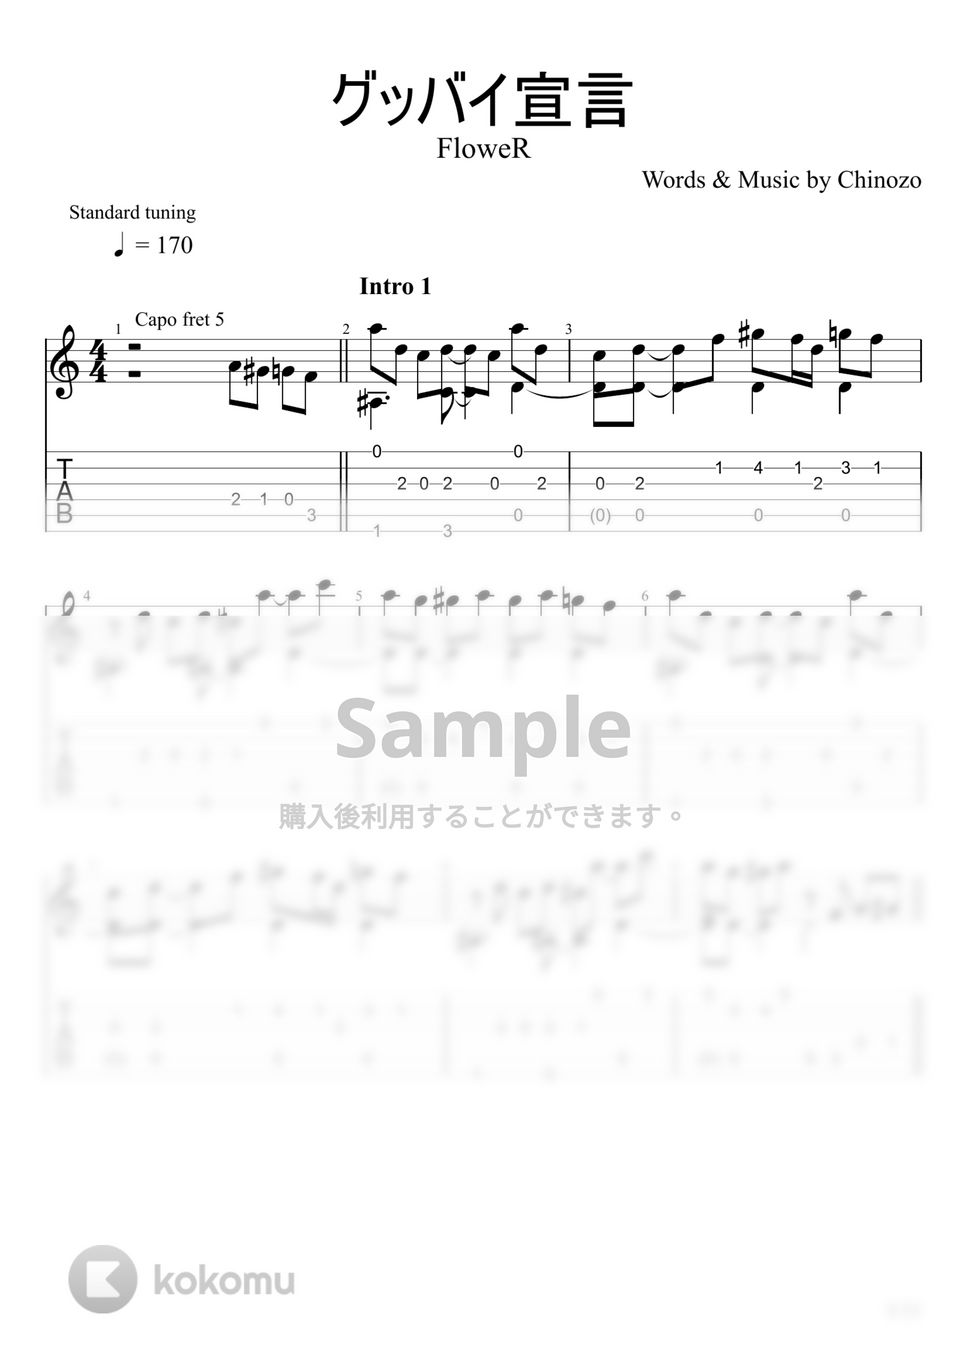 Chinozo - グッバイ宣言 (ソロギター) by u3danchou